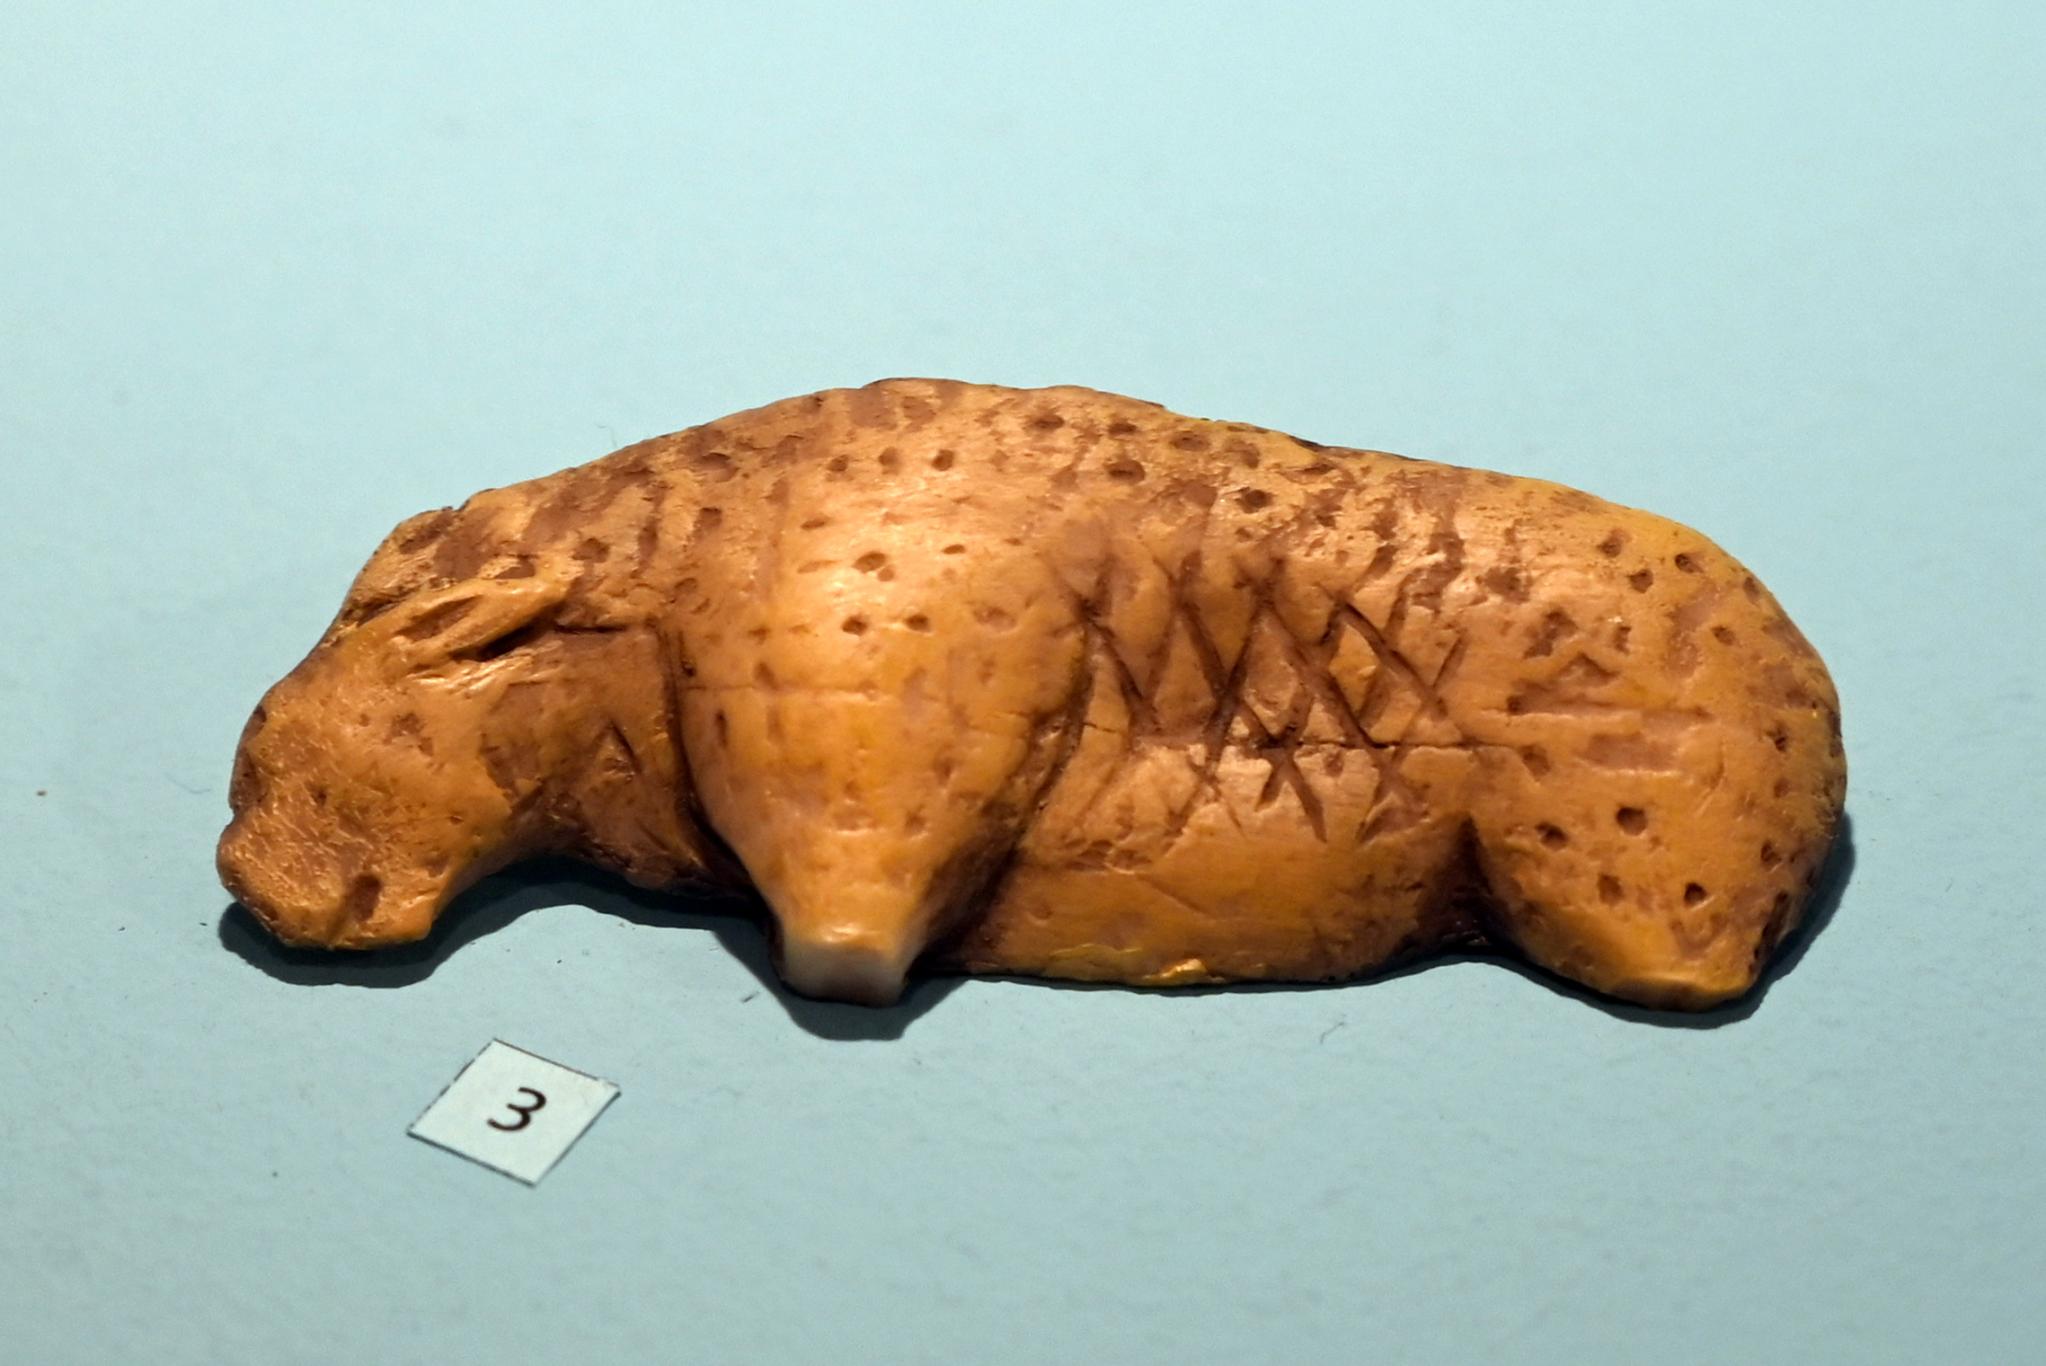 Löwe (Kopie), 33000 v. Chr.